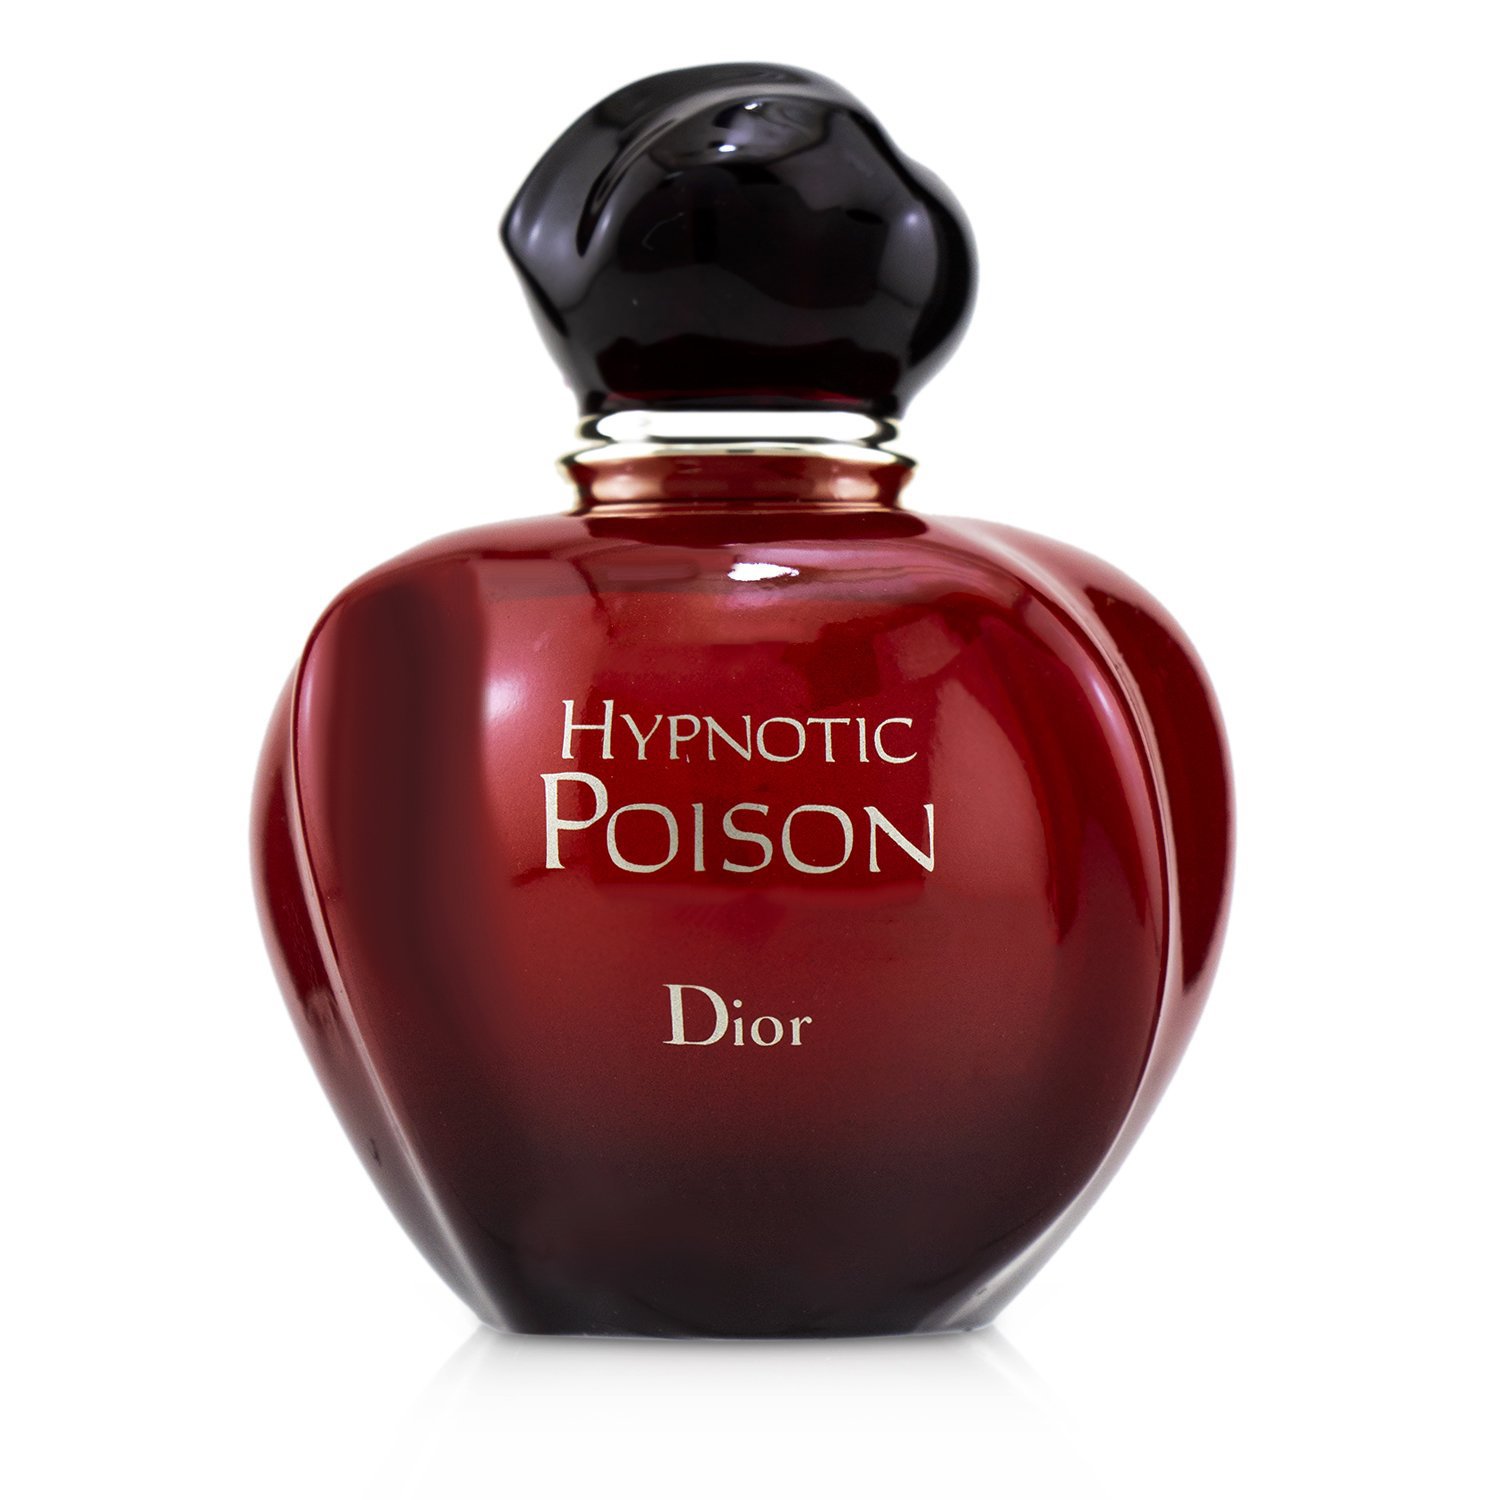 迪奧 Christian Dior - Hypnotic Poison 紅毒藥淡香水